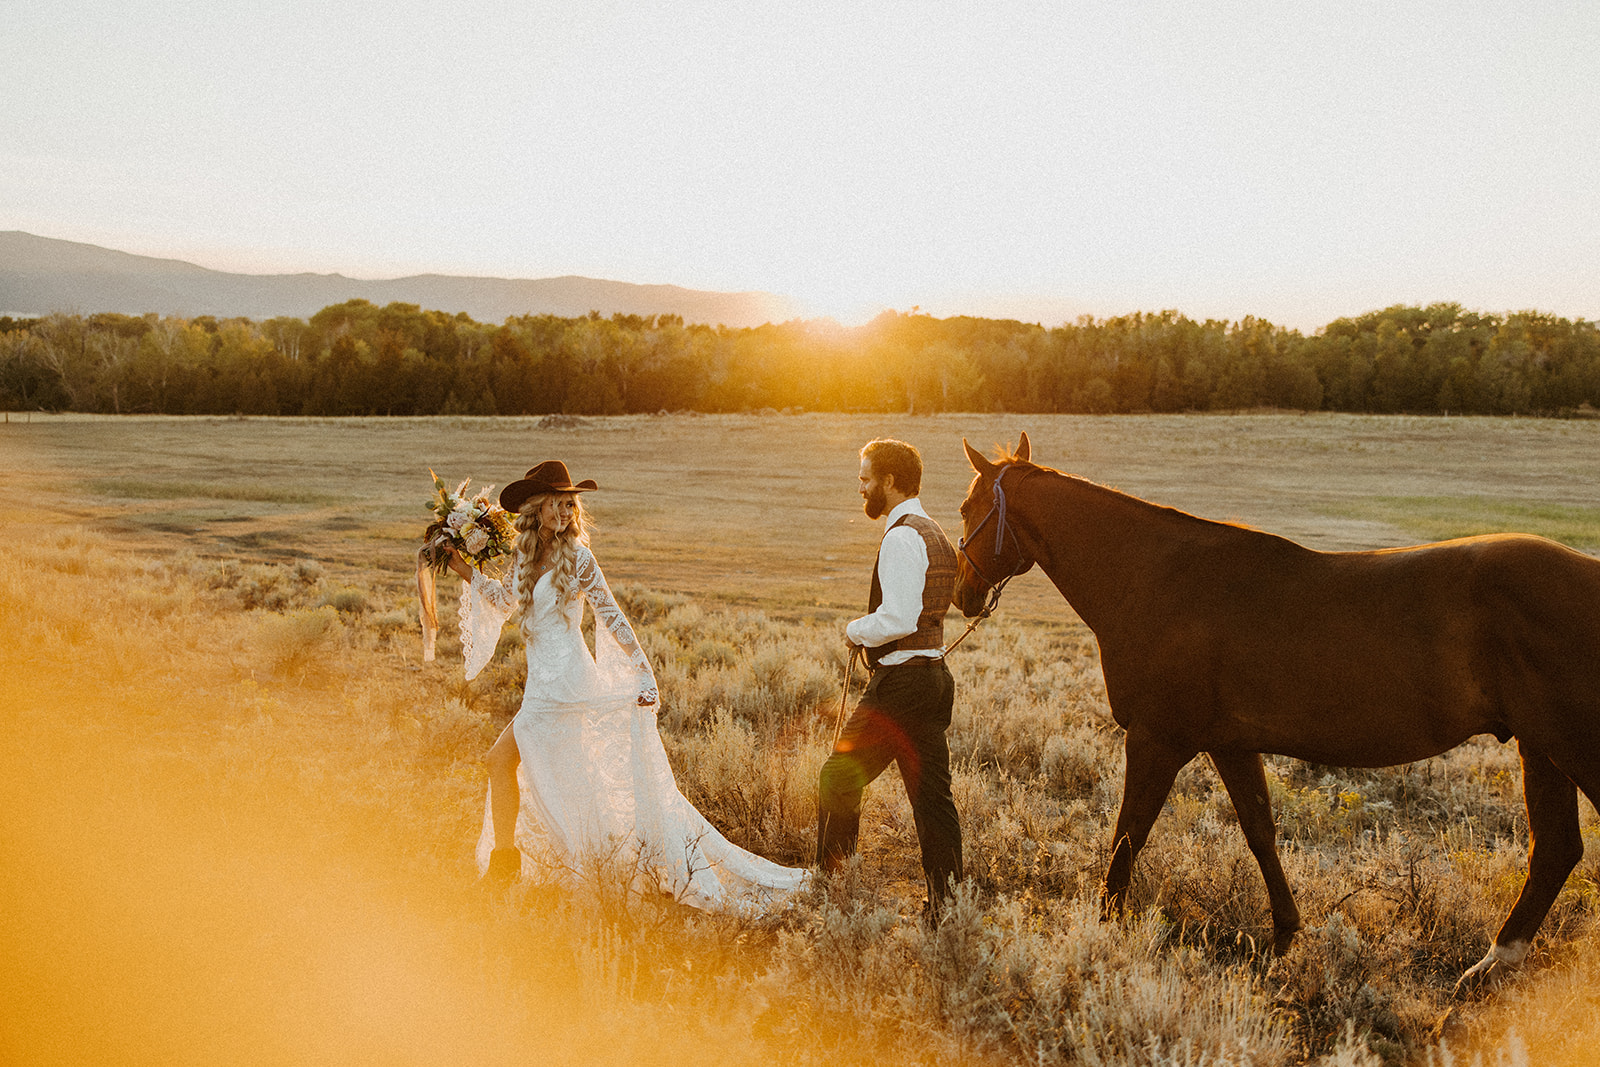 Bride, groom, and horse western wedding portraits captured by Tawnee Bree Photo - Montana Wedding Photographer